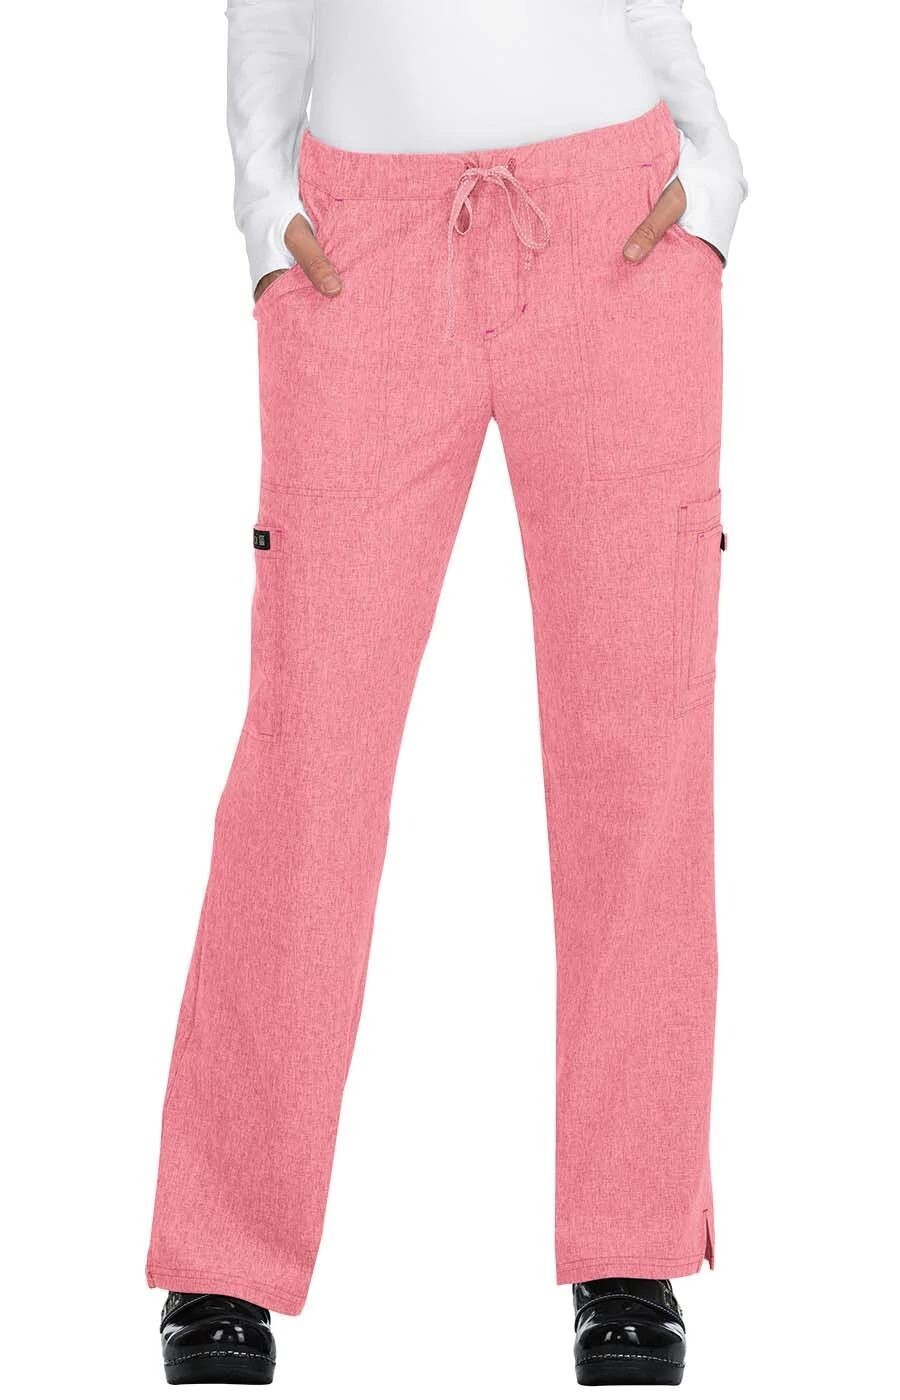 Pantalone KOI BASICS HOLLY Donna Colore 140. Soft Pink